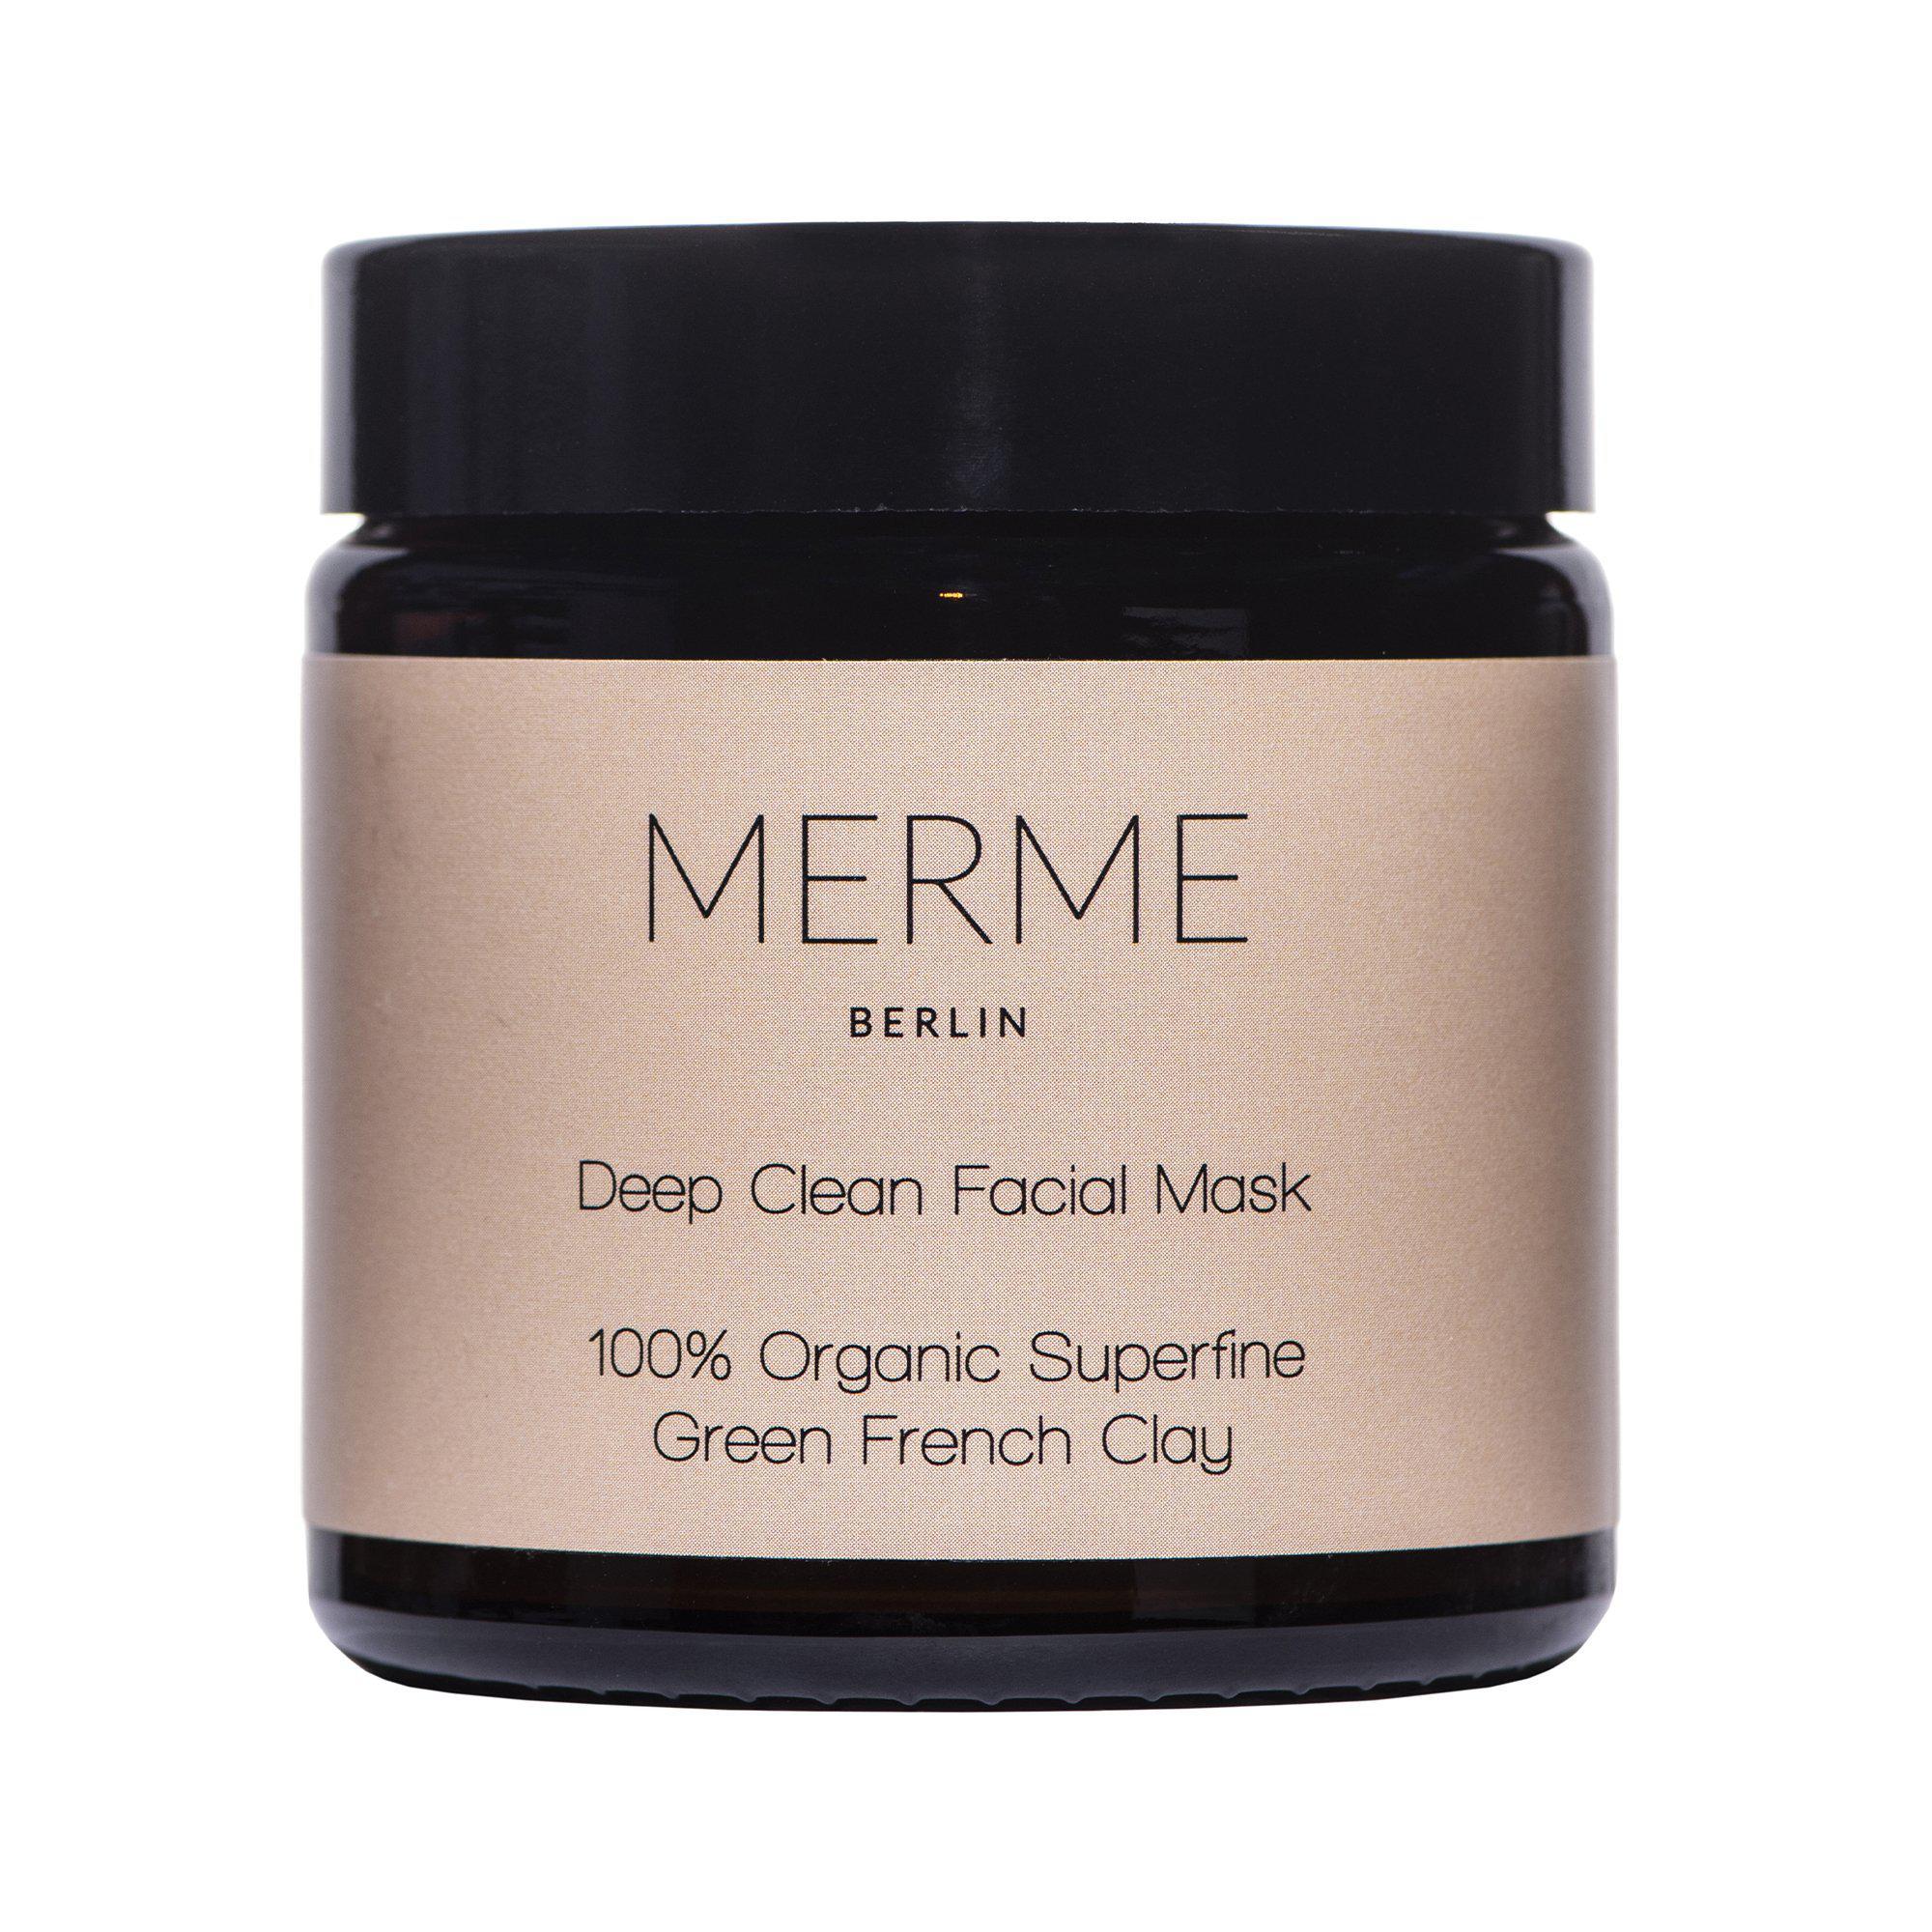 Indisponible - Deep Clean Facial Mask - Argile Verte Française Nicht verfügbar – Deep Clean Gesichtsmaske – Französische grüne Tonerde - Merme